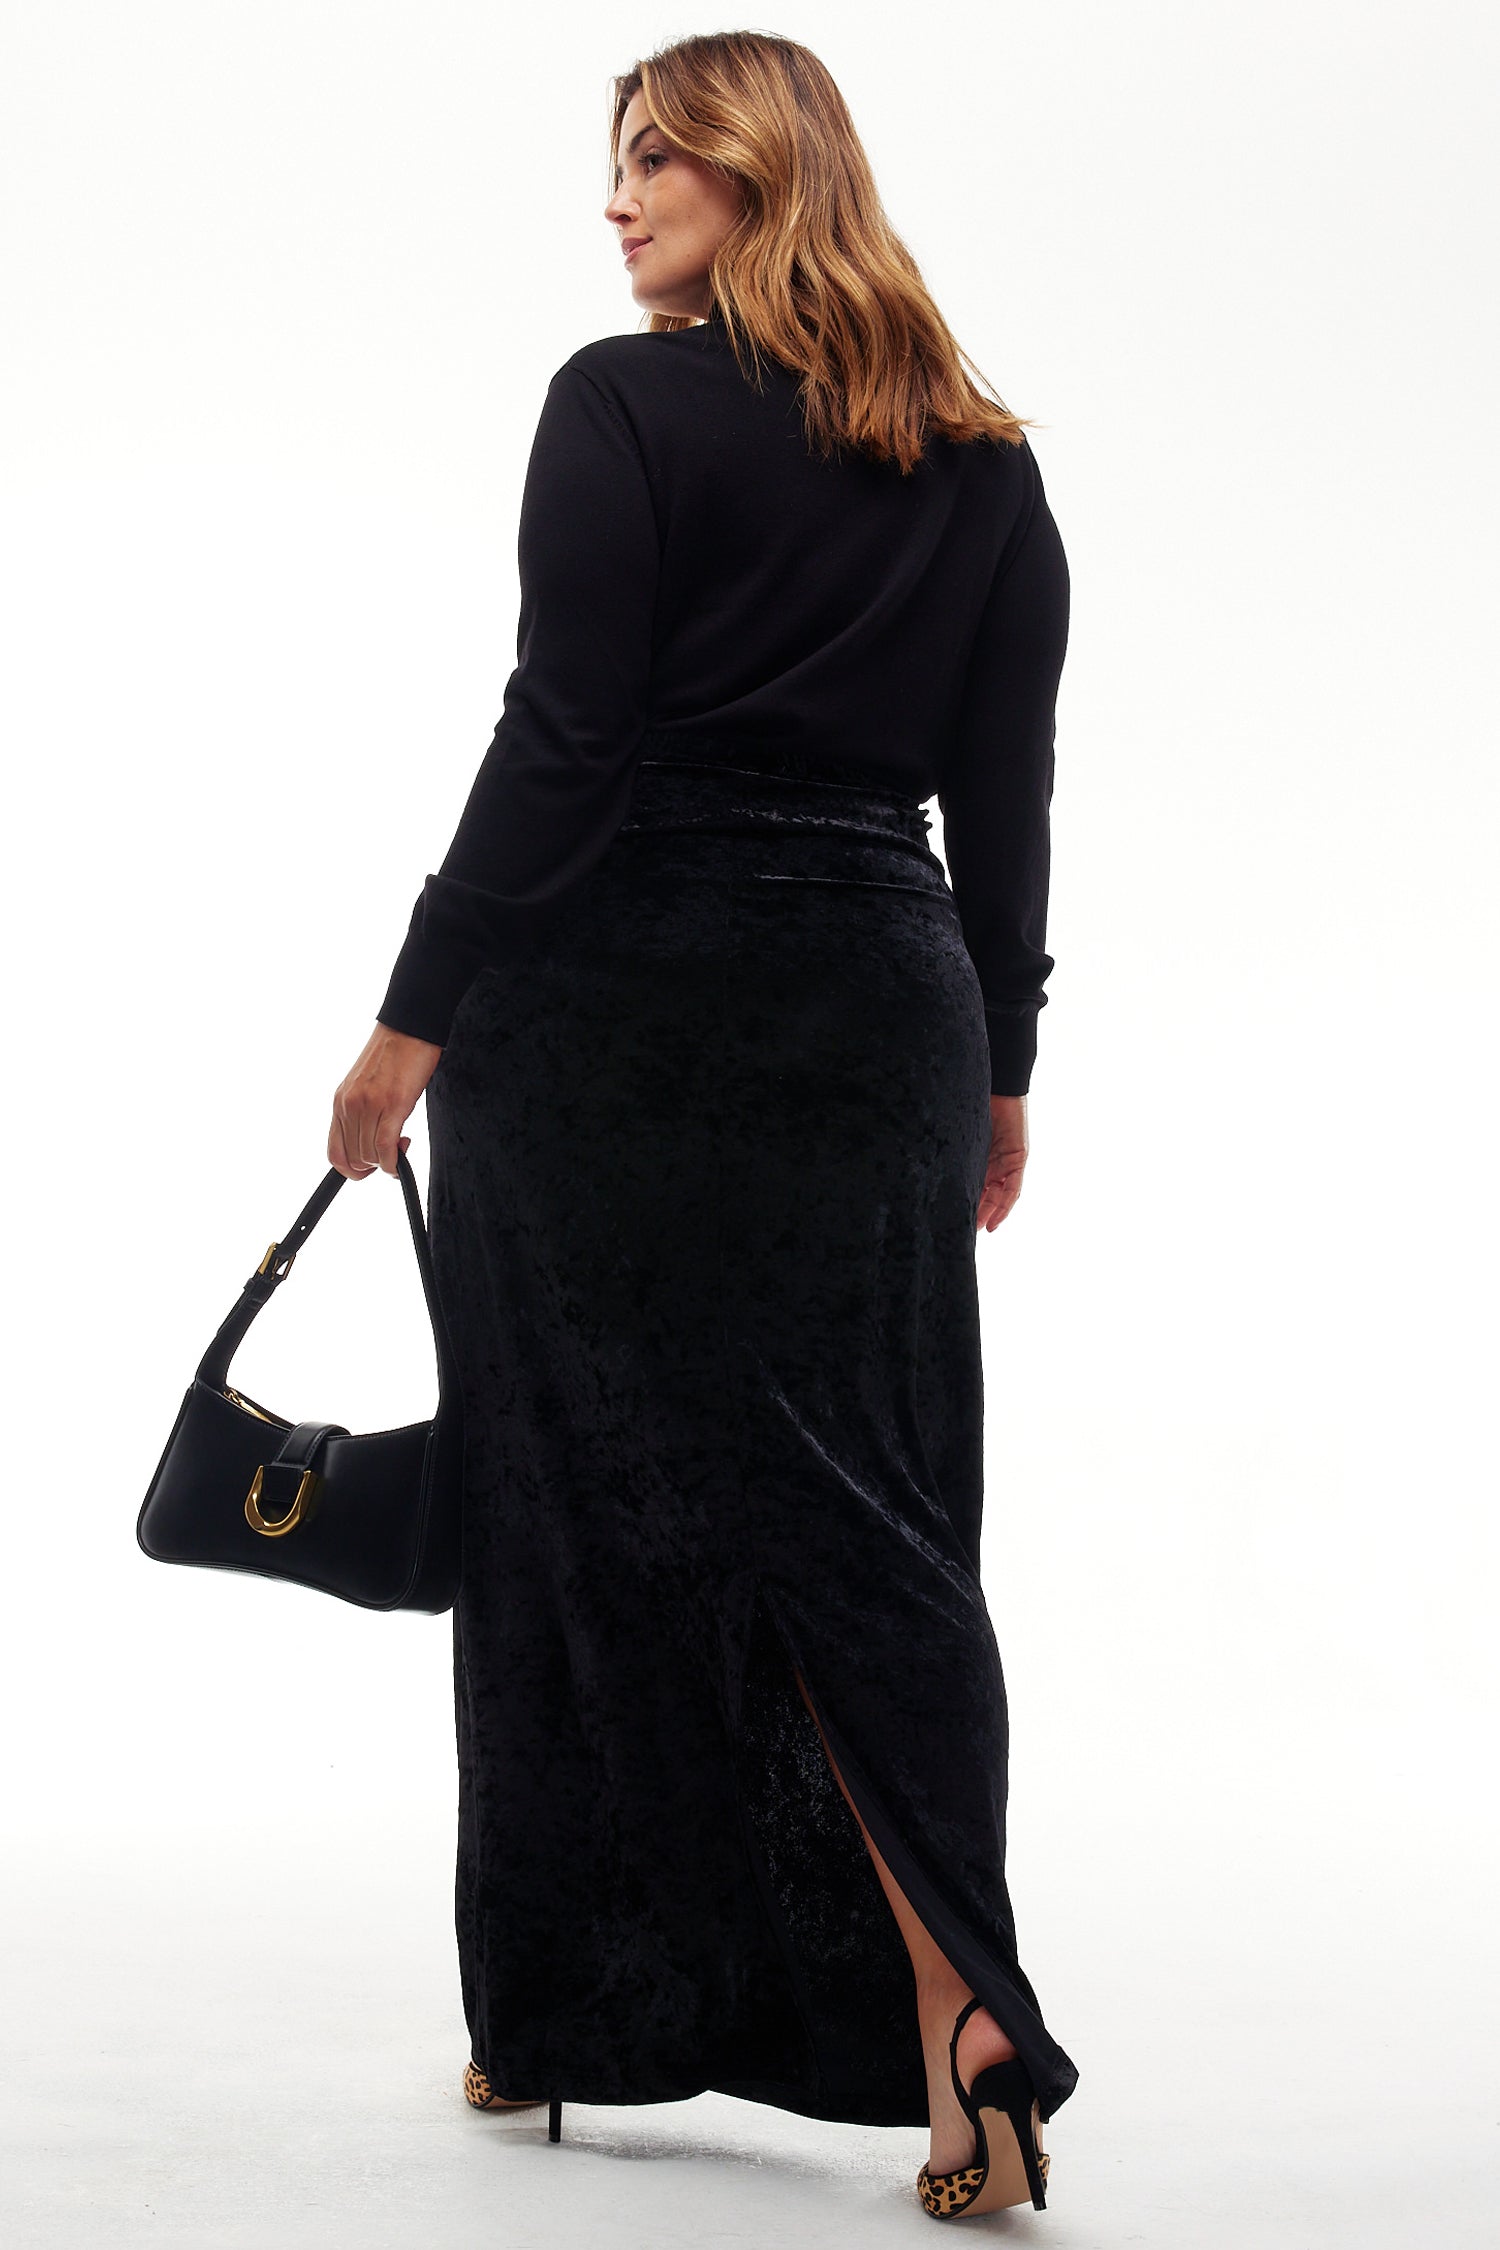 Model wearing Black Velvet Maxi Dress standing facing away from the camera